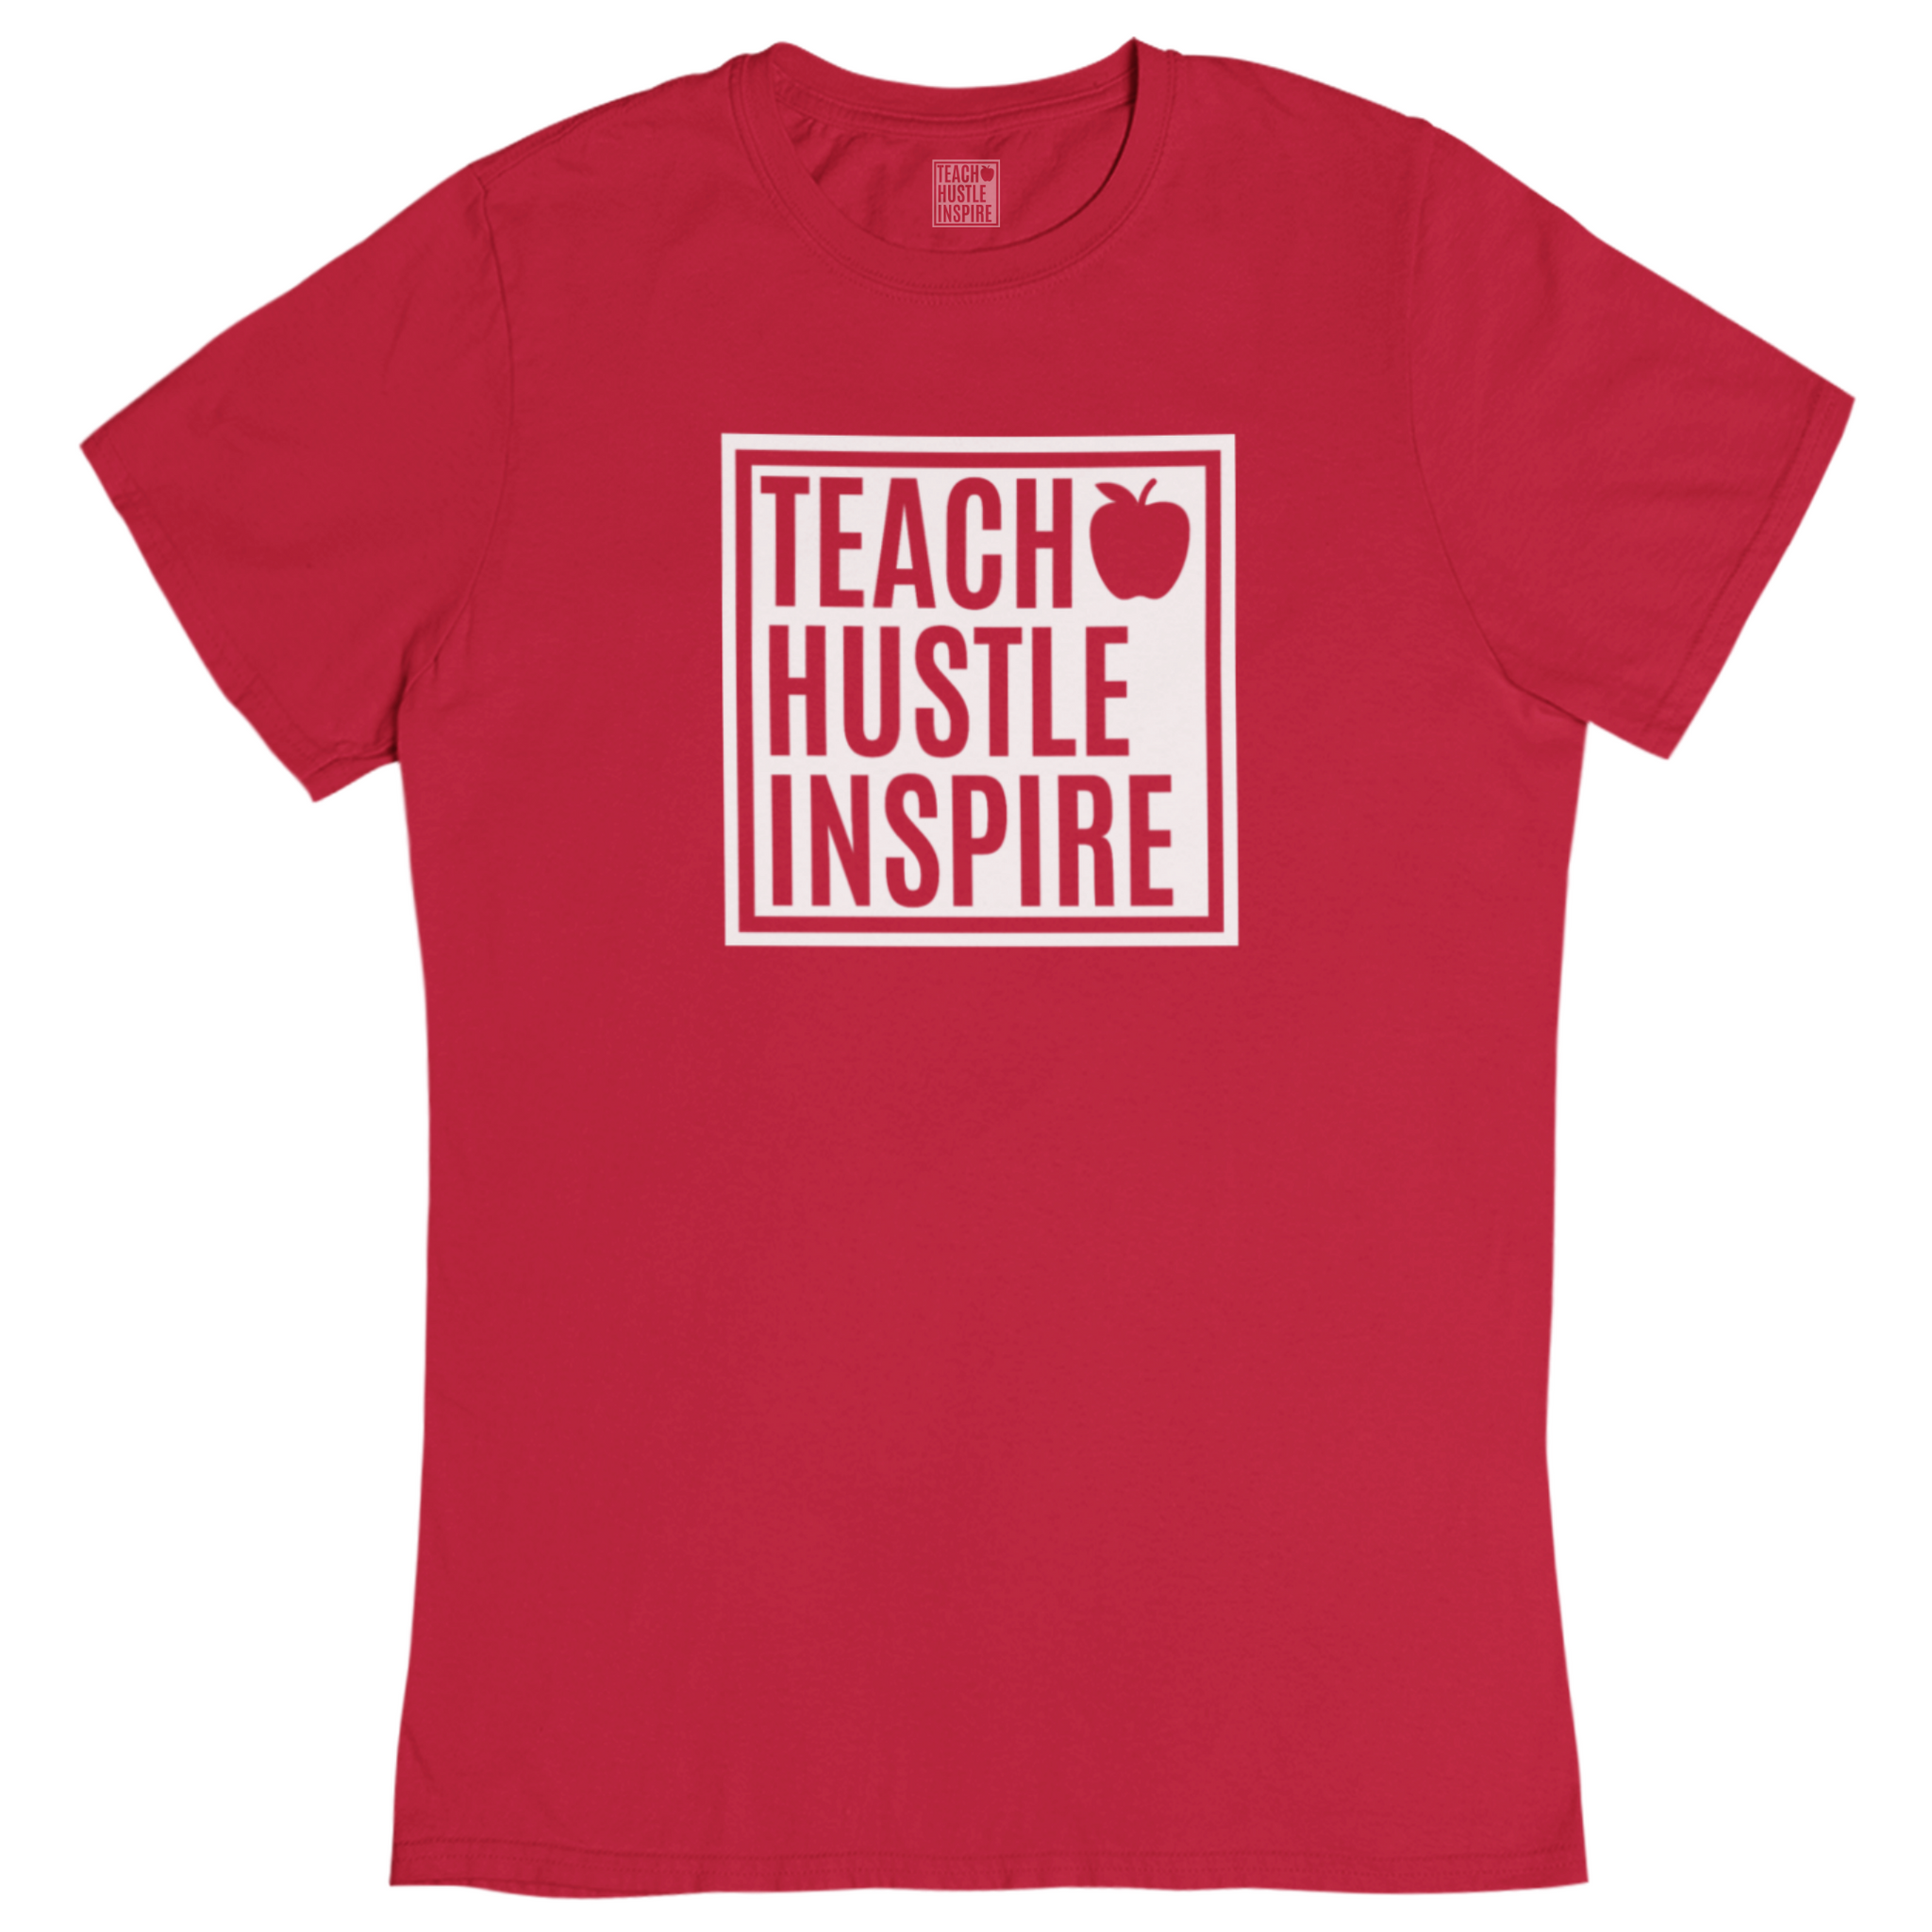 Teach Hustle Inspire - CANDY APPLE